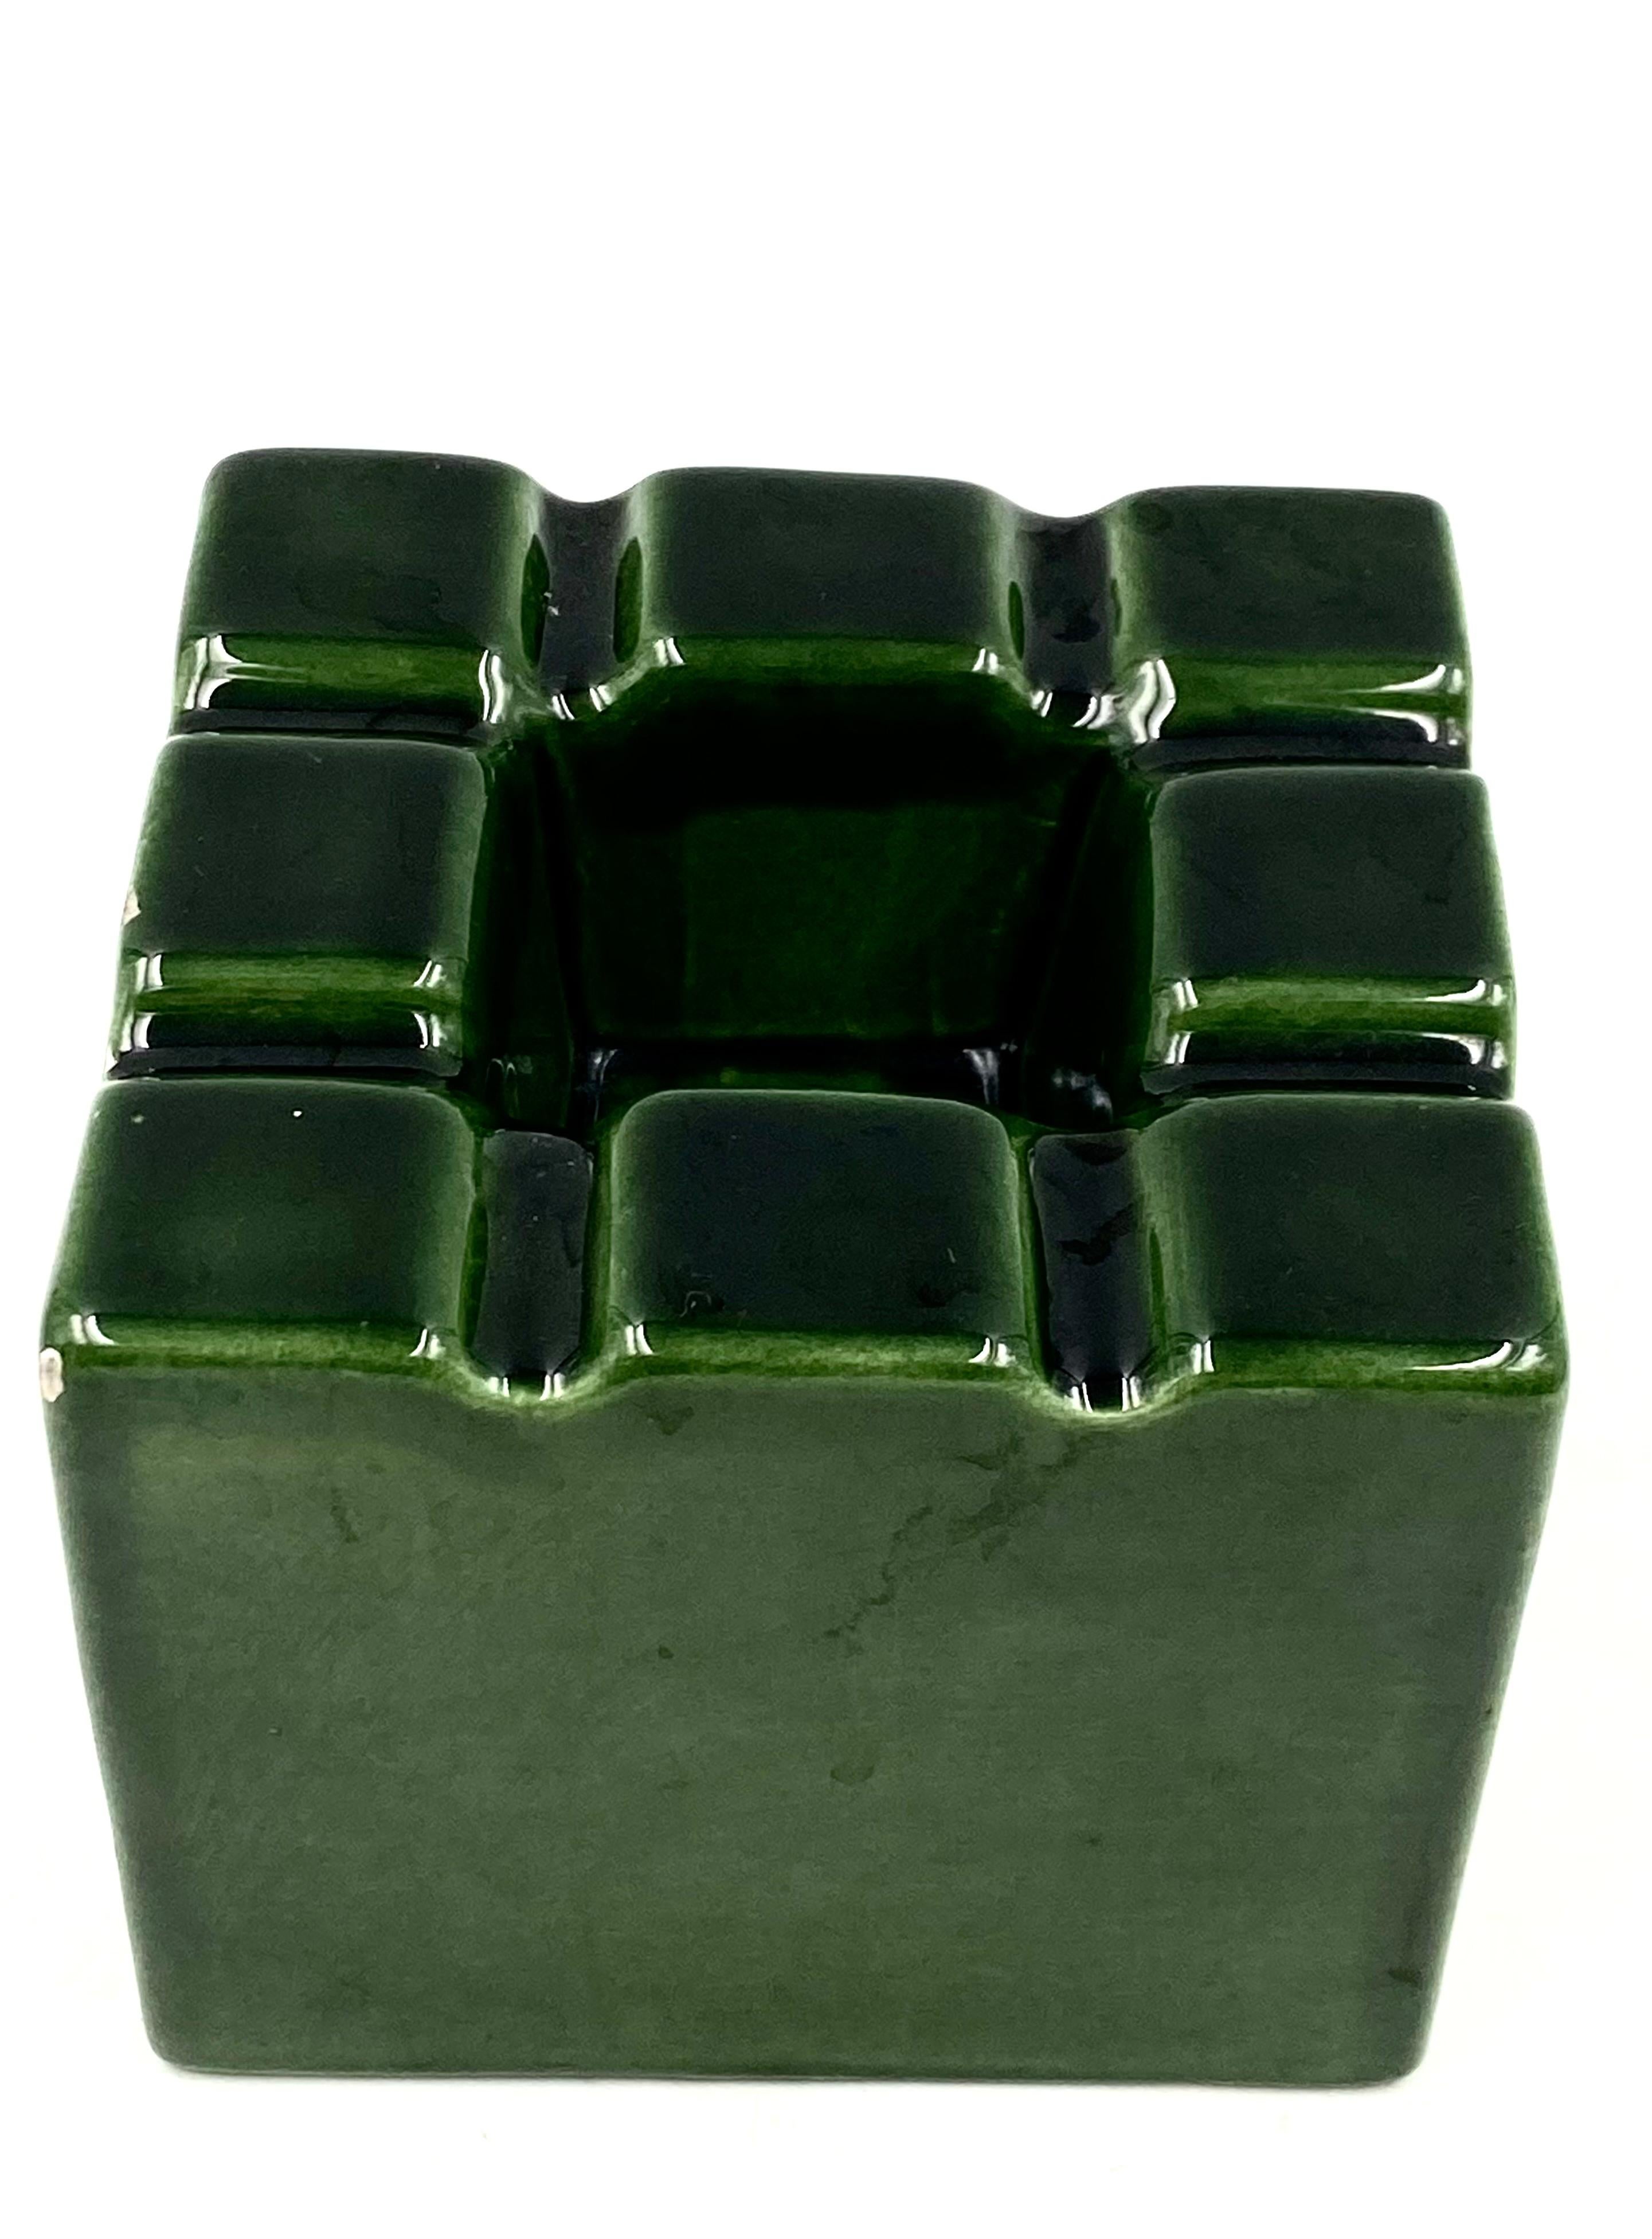 Green Cubic Glazed Ceramic Ashtray, Sicart, Italy, 1970s 3